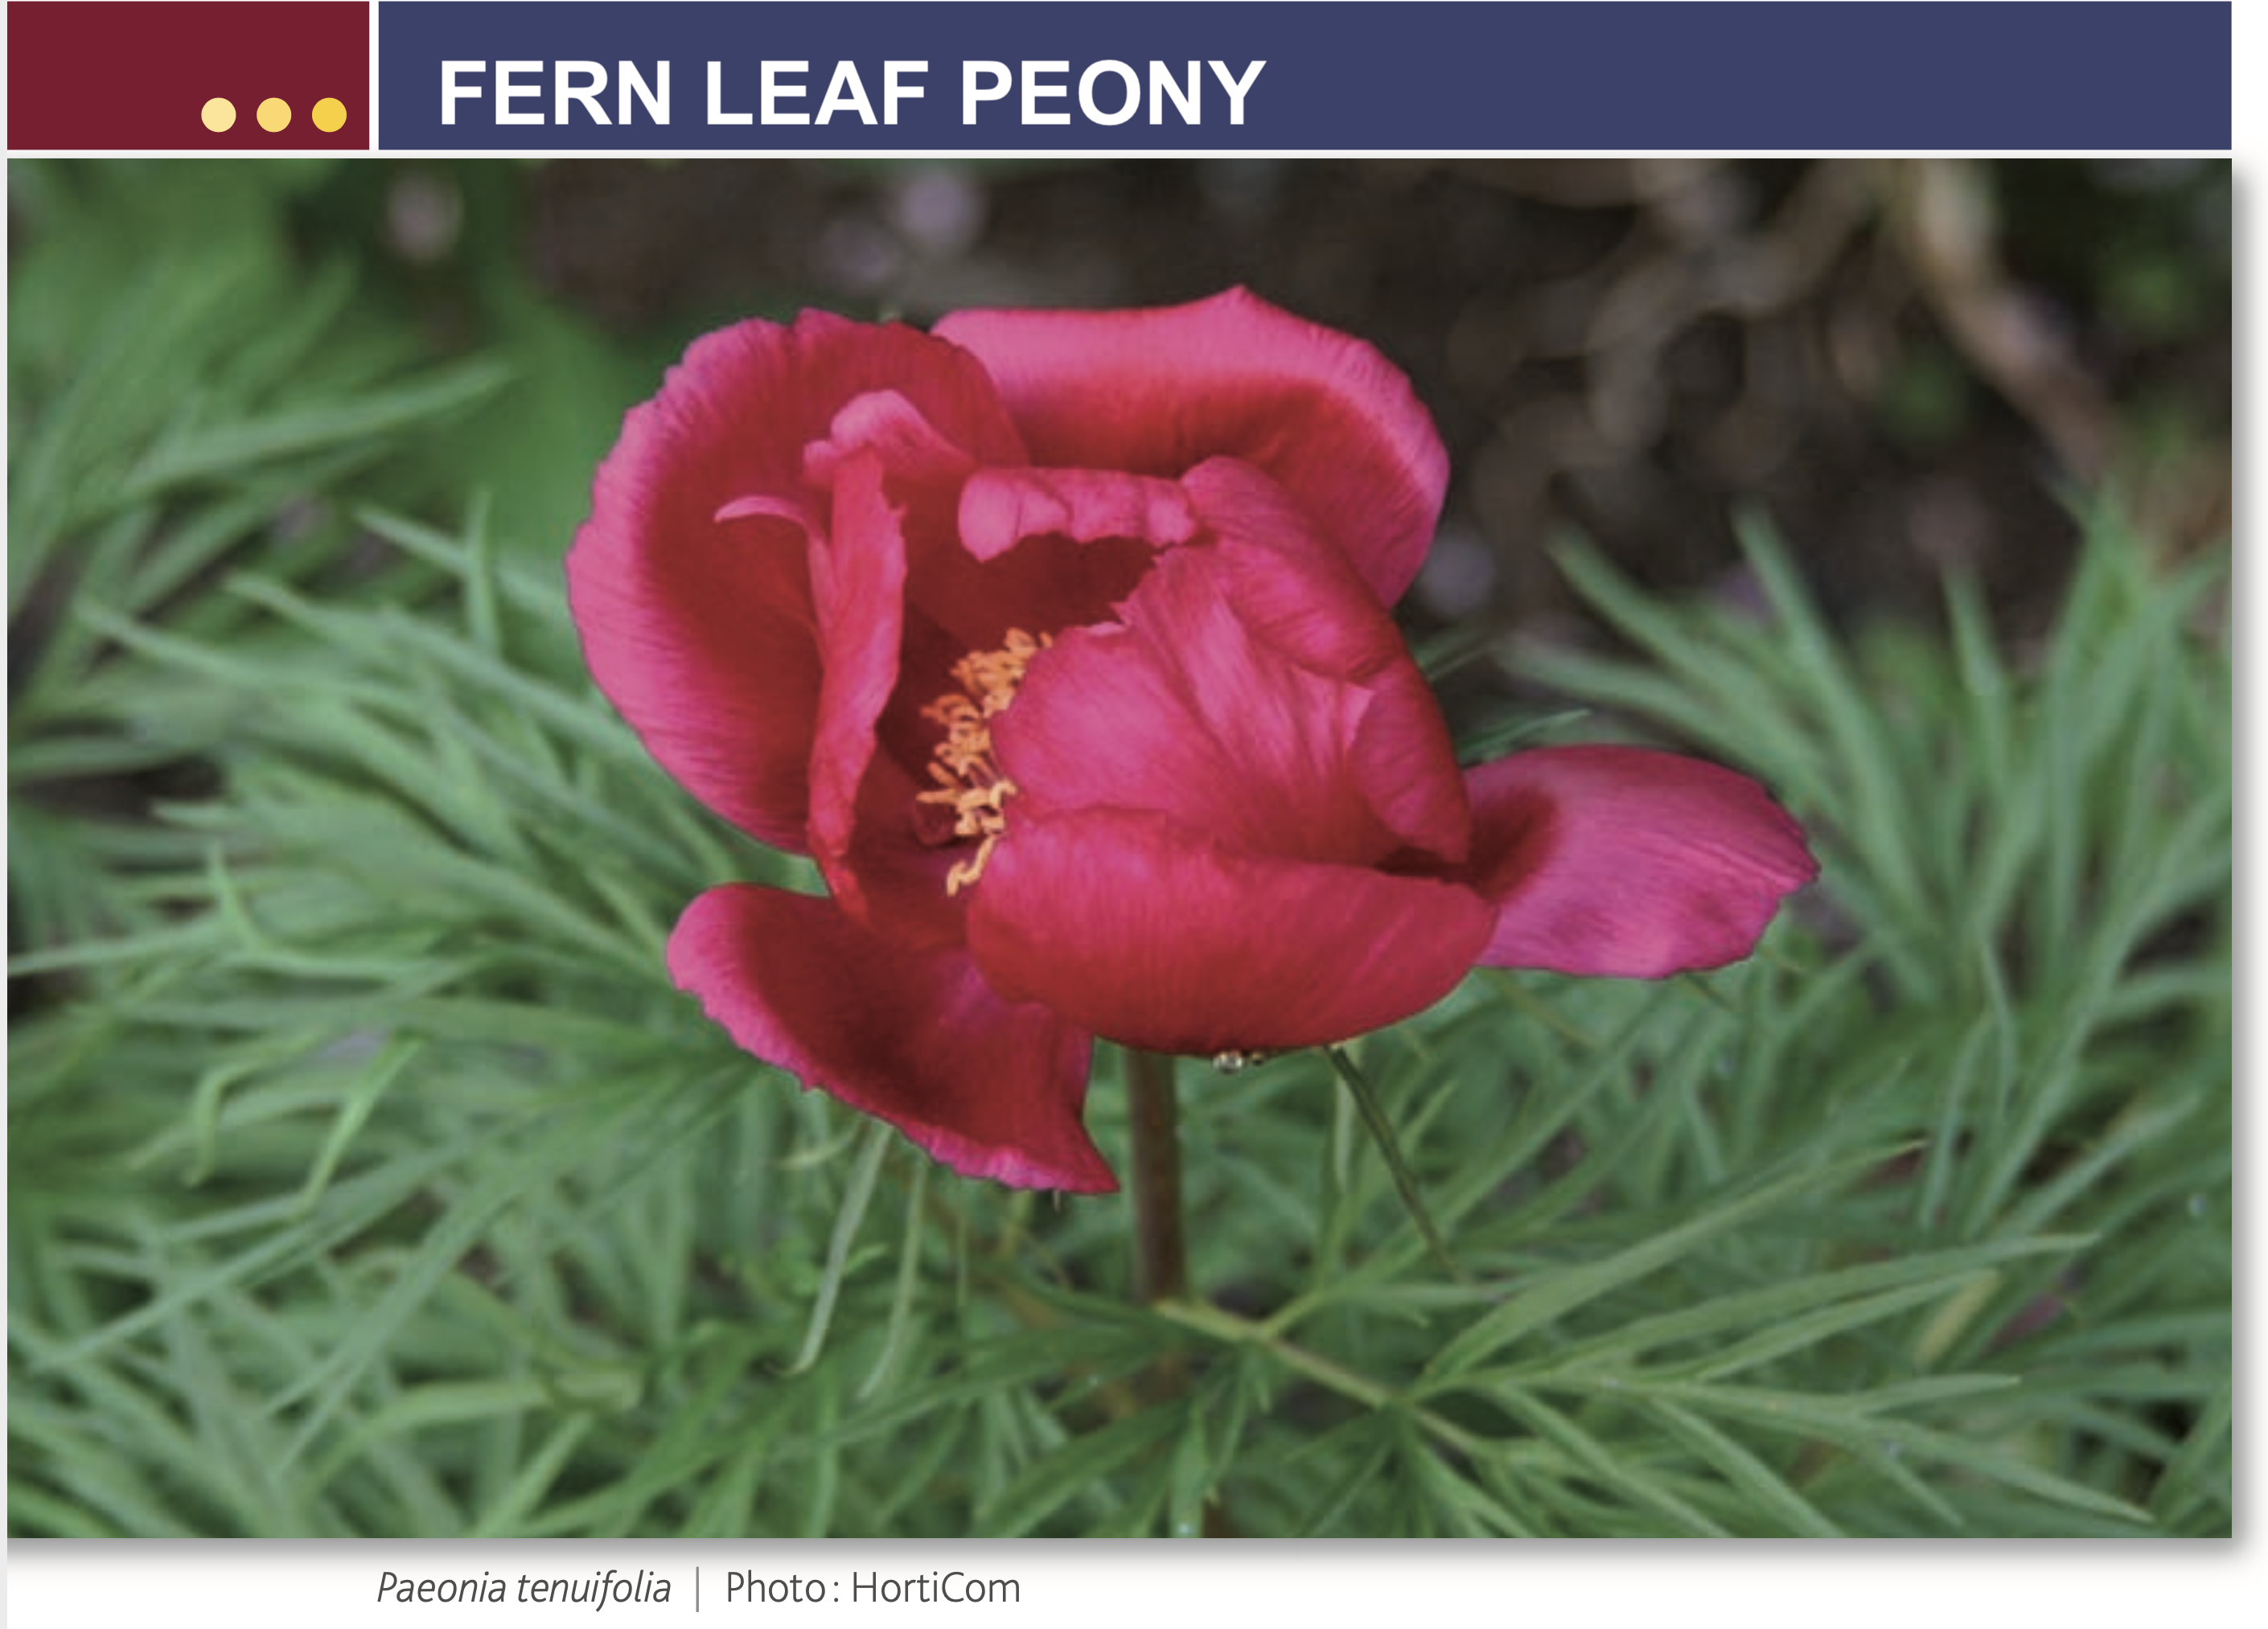 Fern leaf peony with single red flower